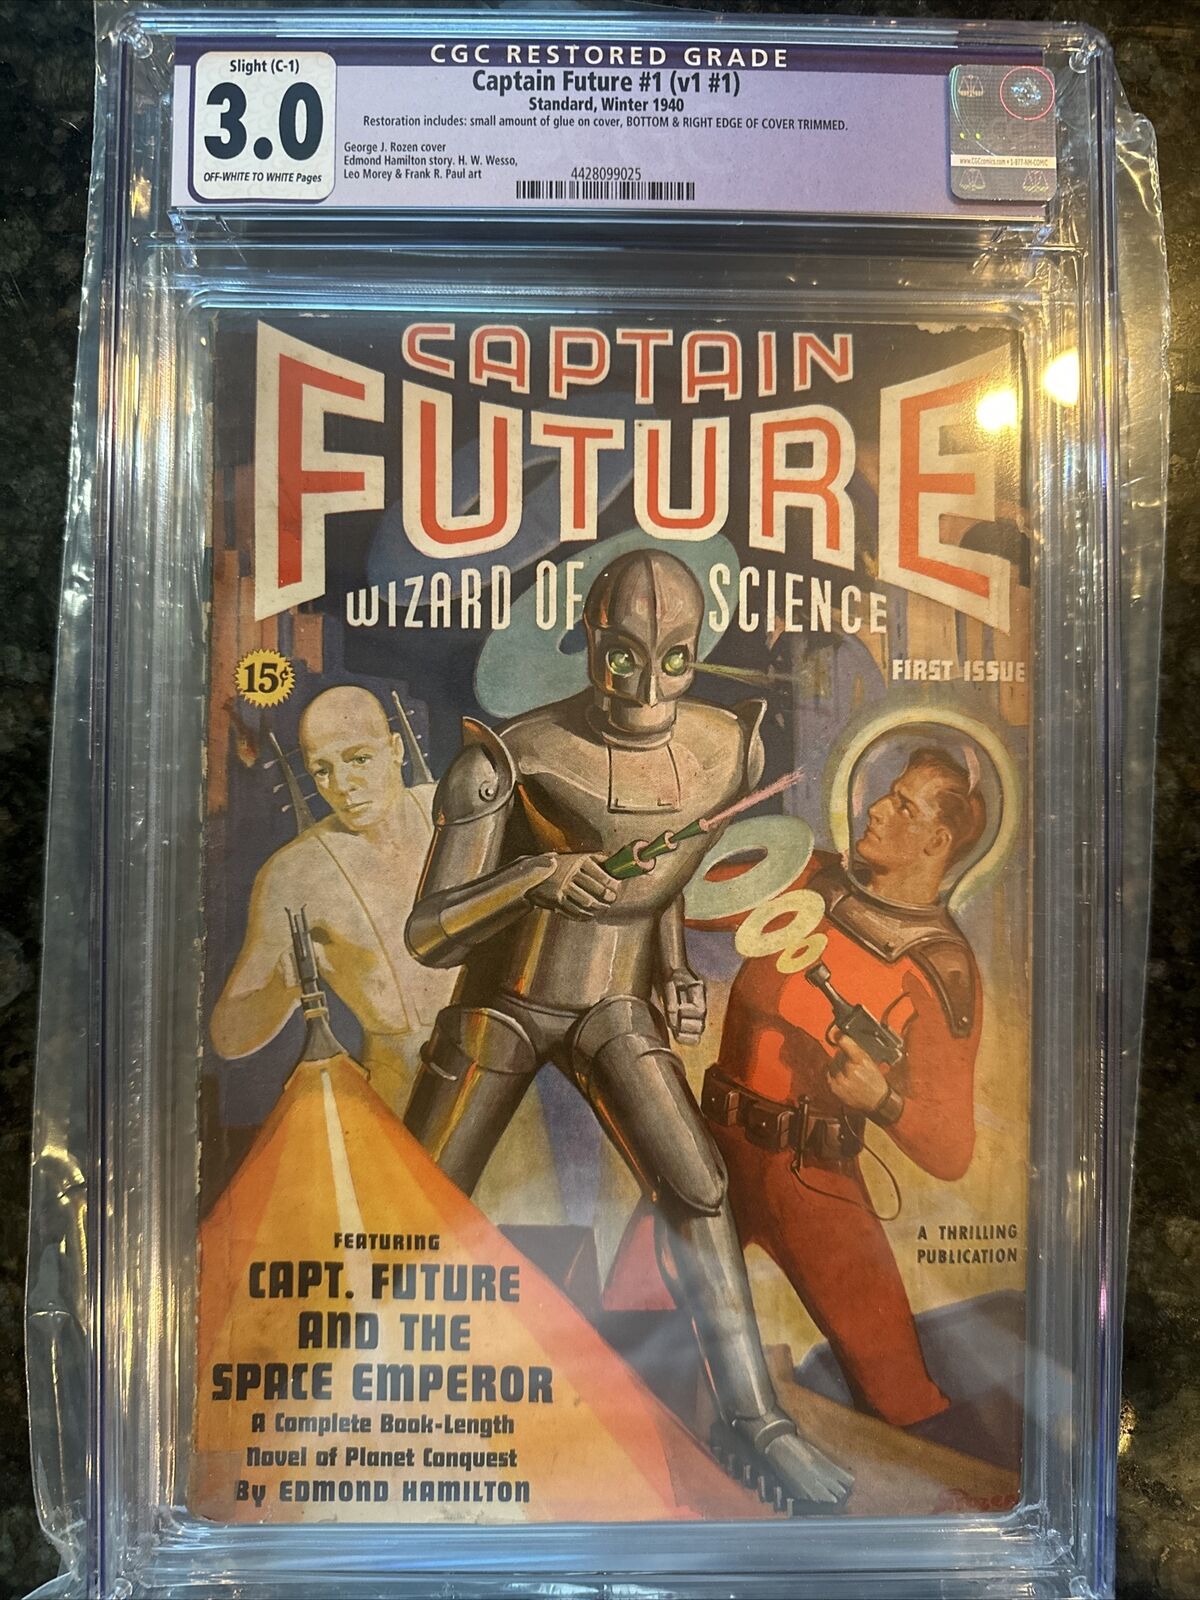 CGC 3.0 R Captain Future Vol.1 #1 1940 Standard Science-Fiction Pulp Magazine